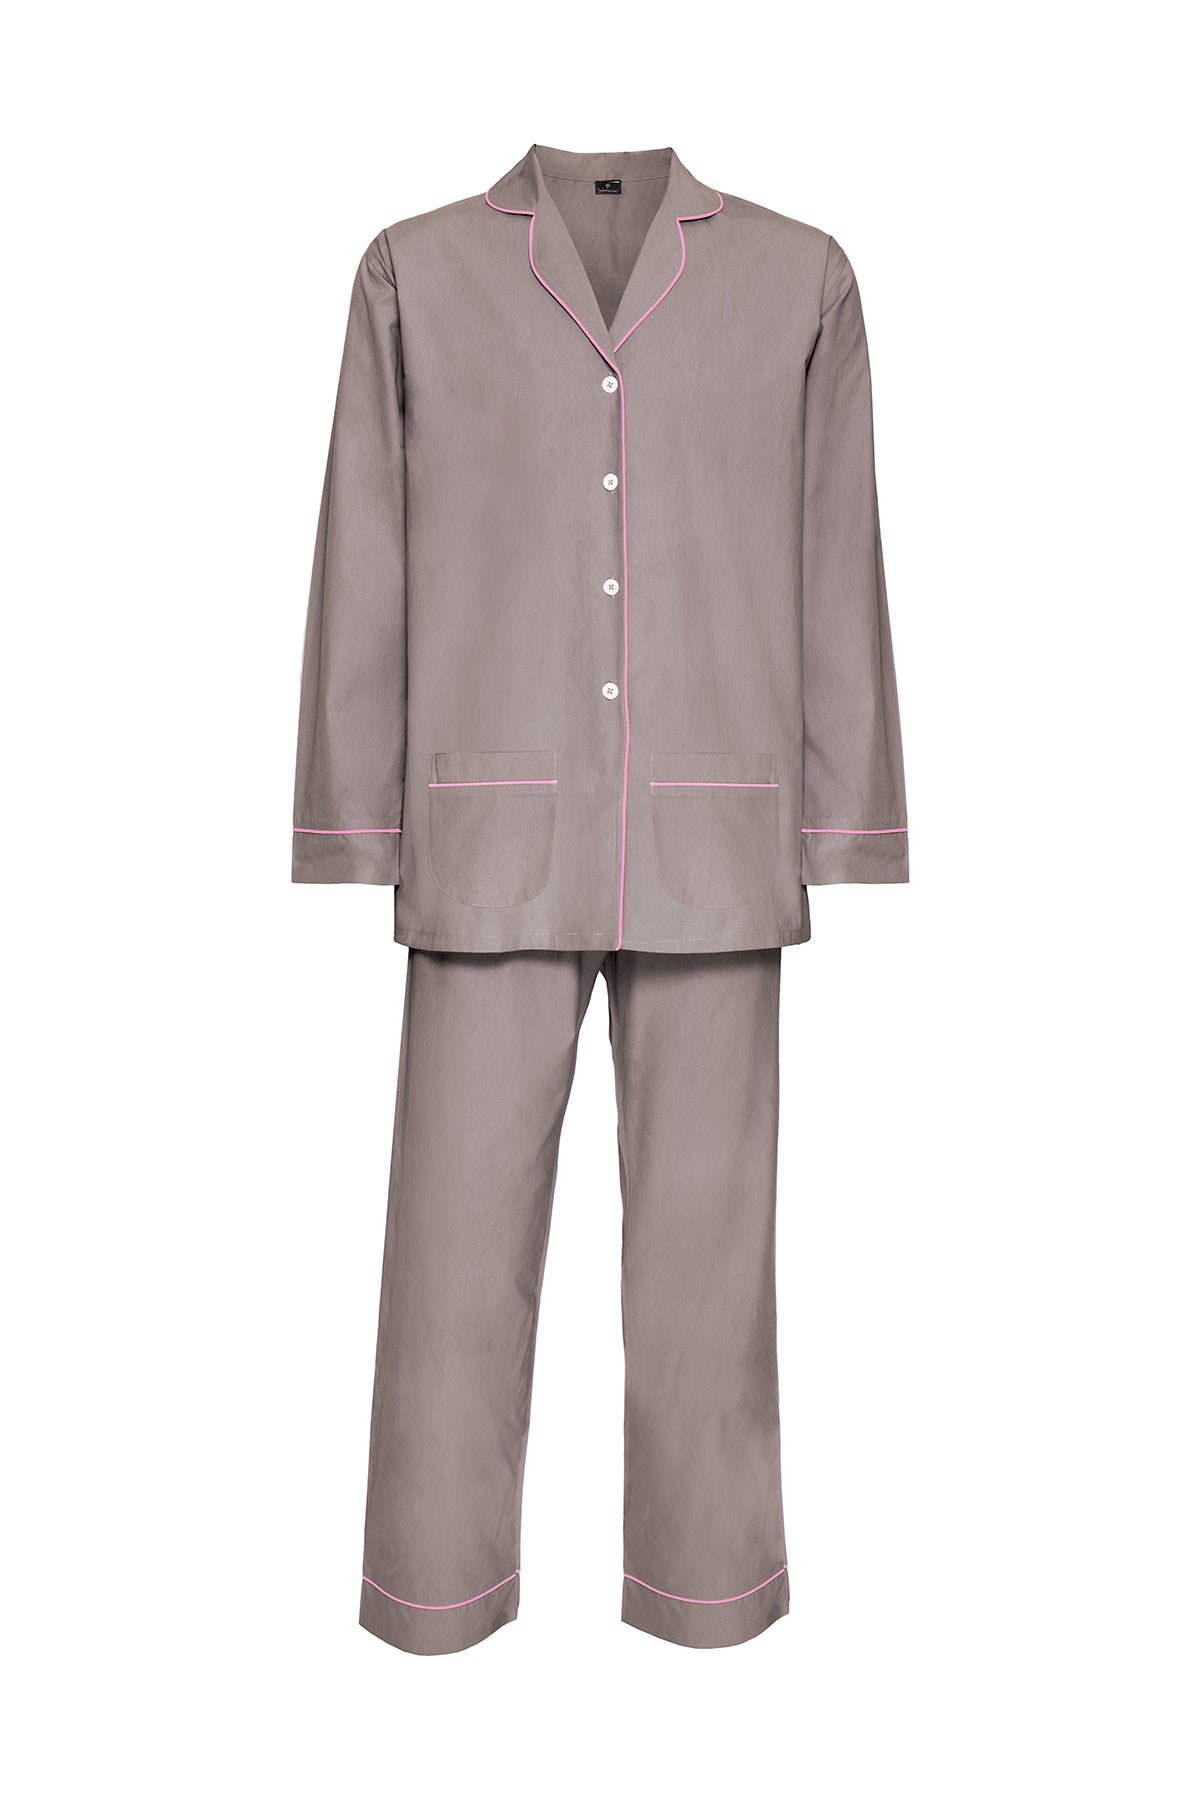 Women's Cotton Pyjamas - Grey & Pink Piping